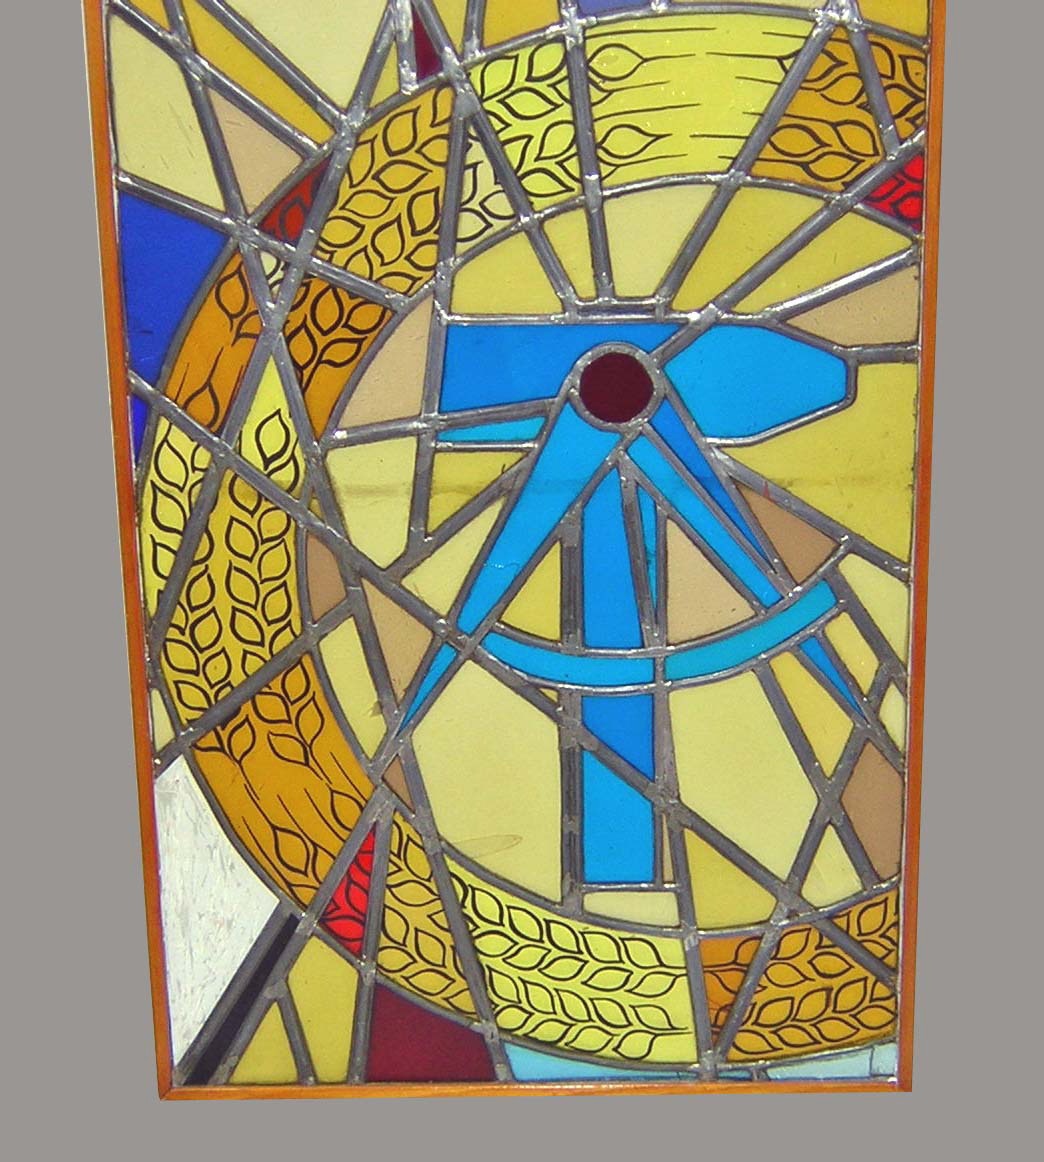 Bleifensterteil, das DDR Emblem darstellend, aus dem Ratssaal Pankow (Museum Pankow CC BY-NC-SA)